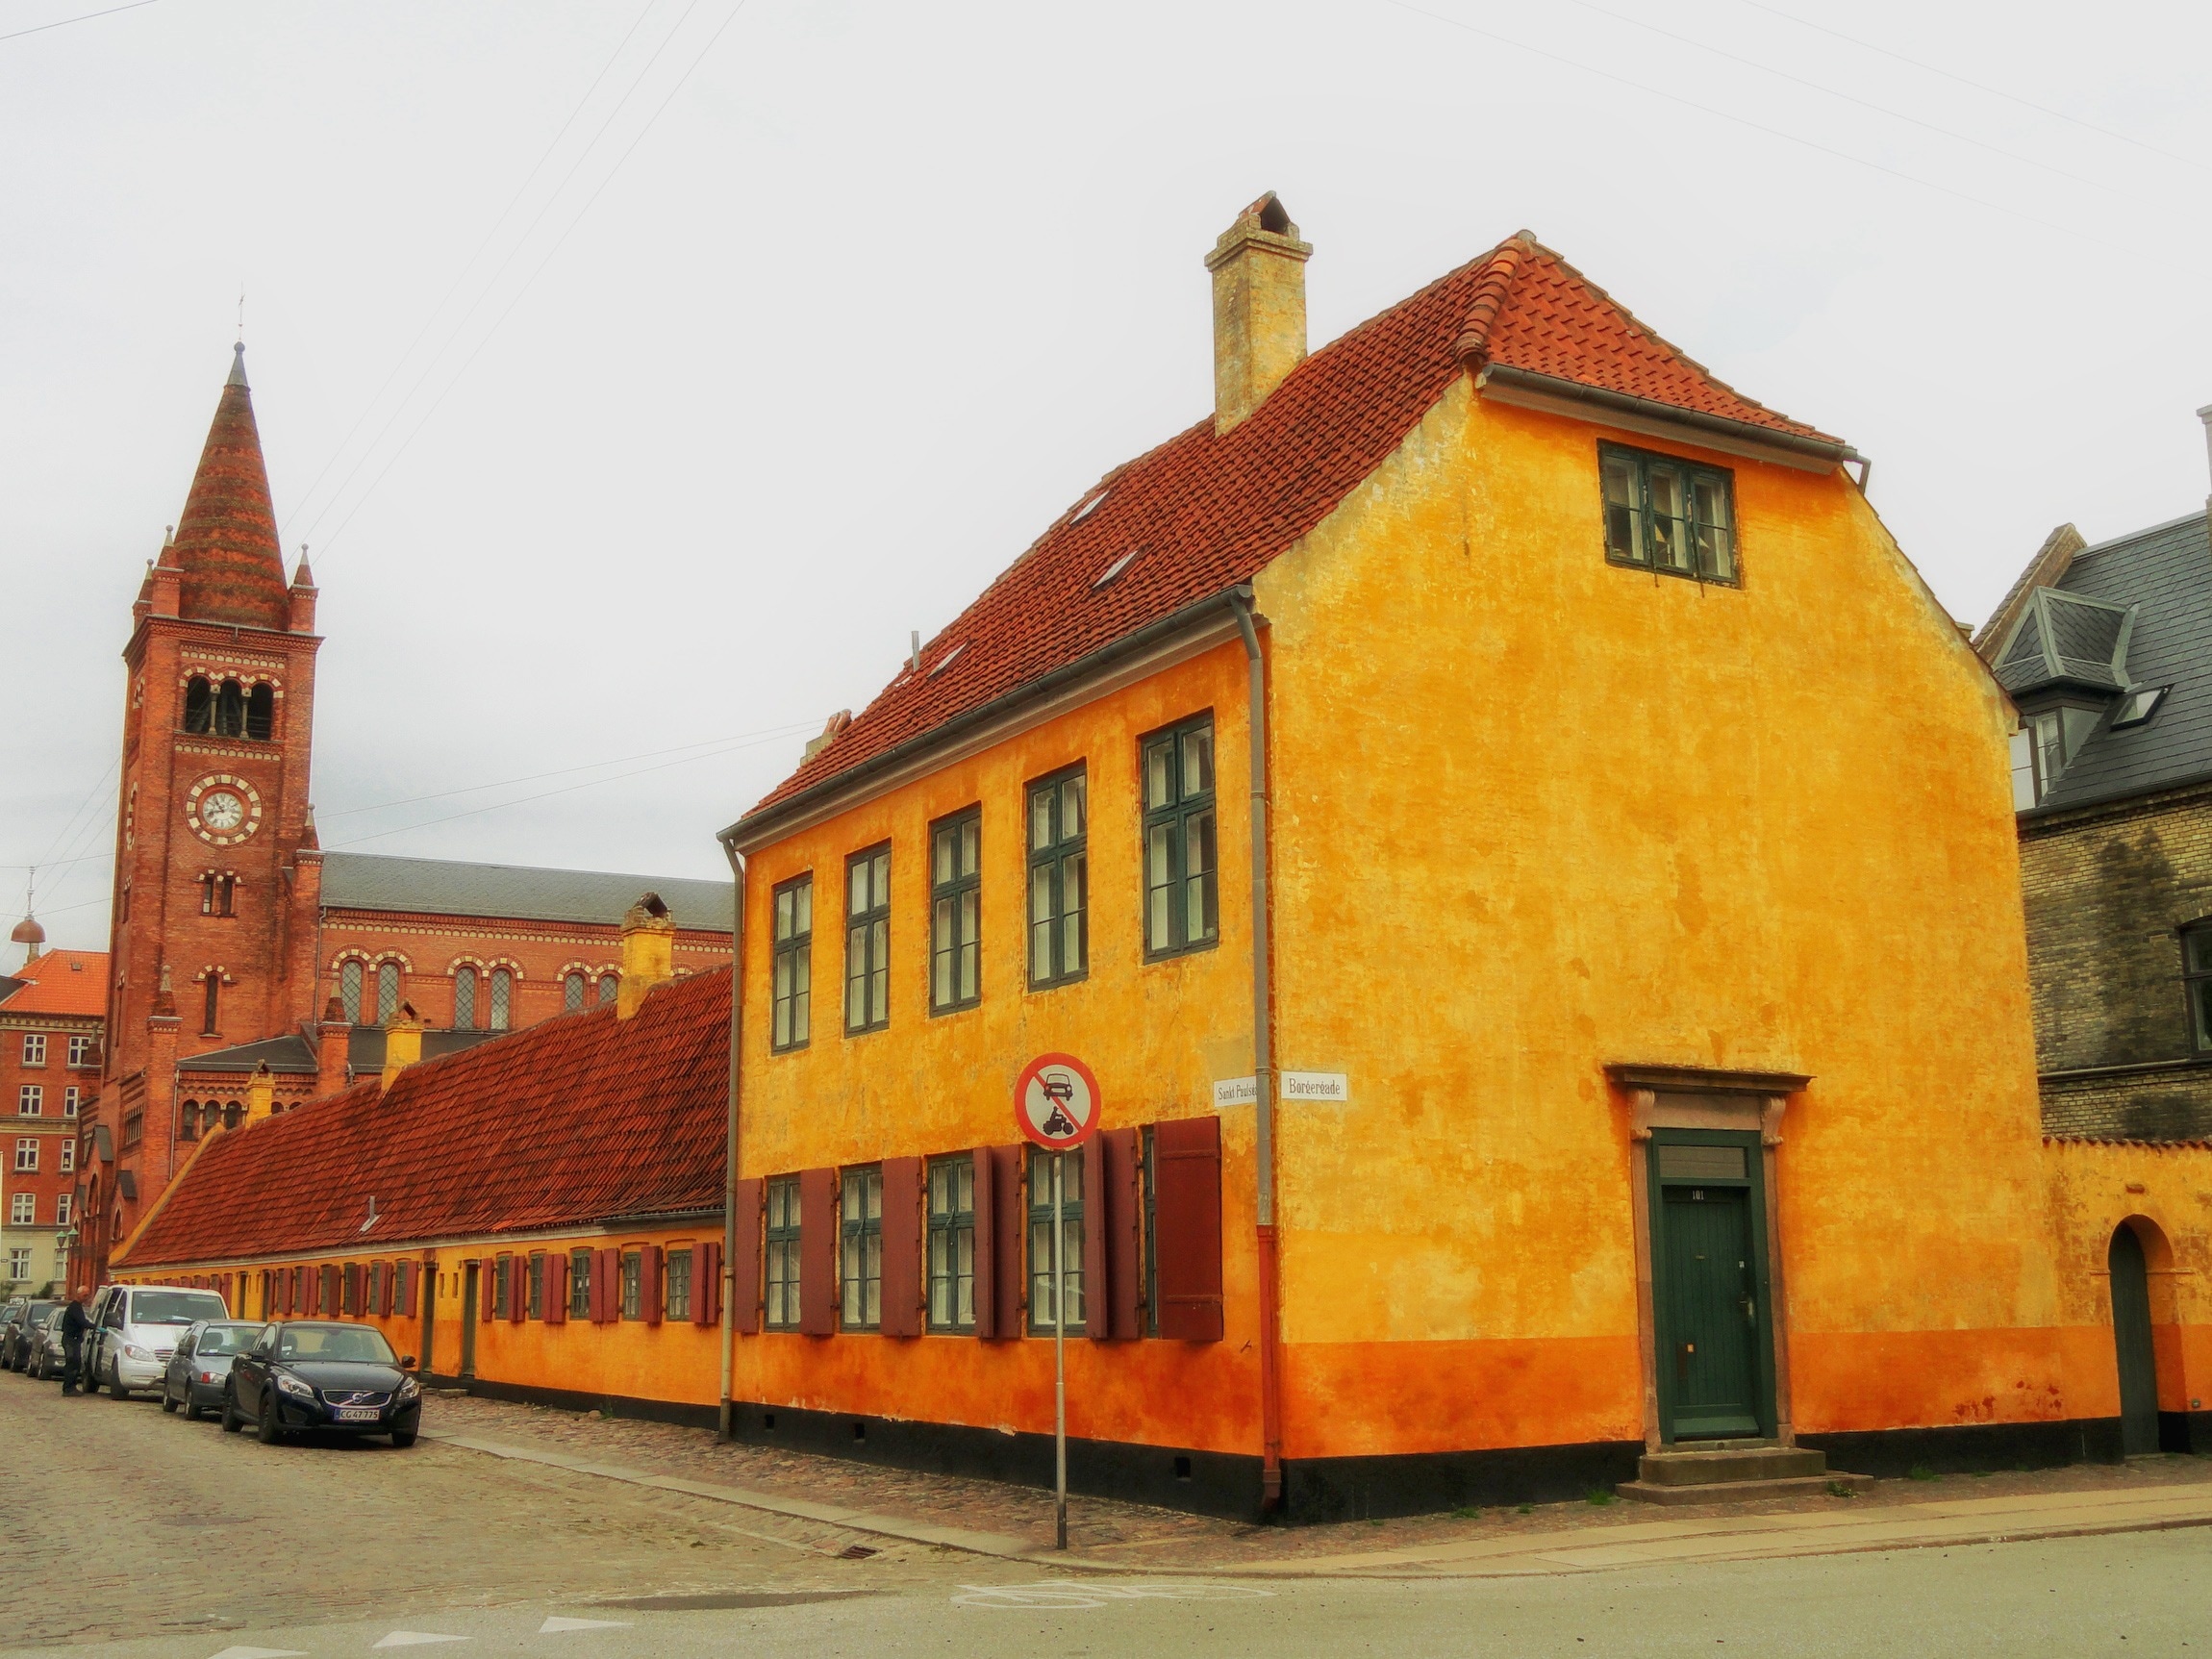 fjallbacka church in sweden